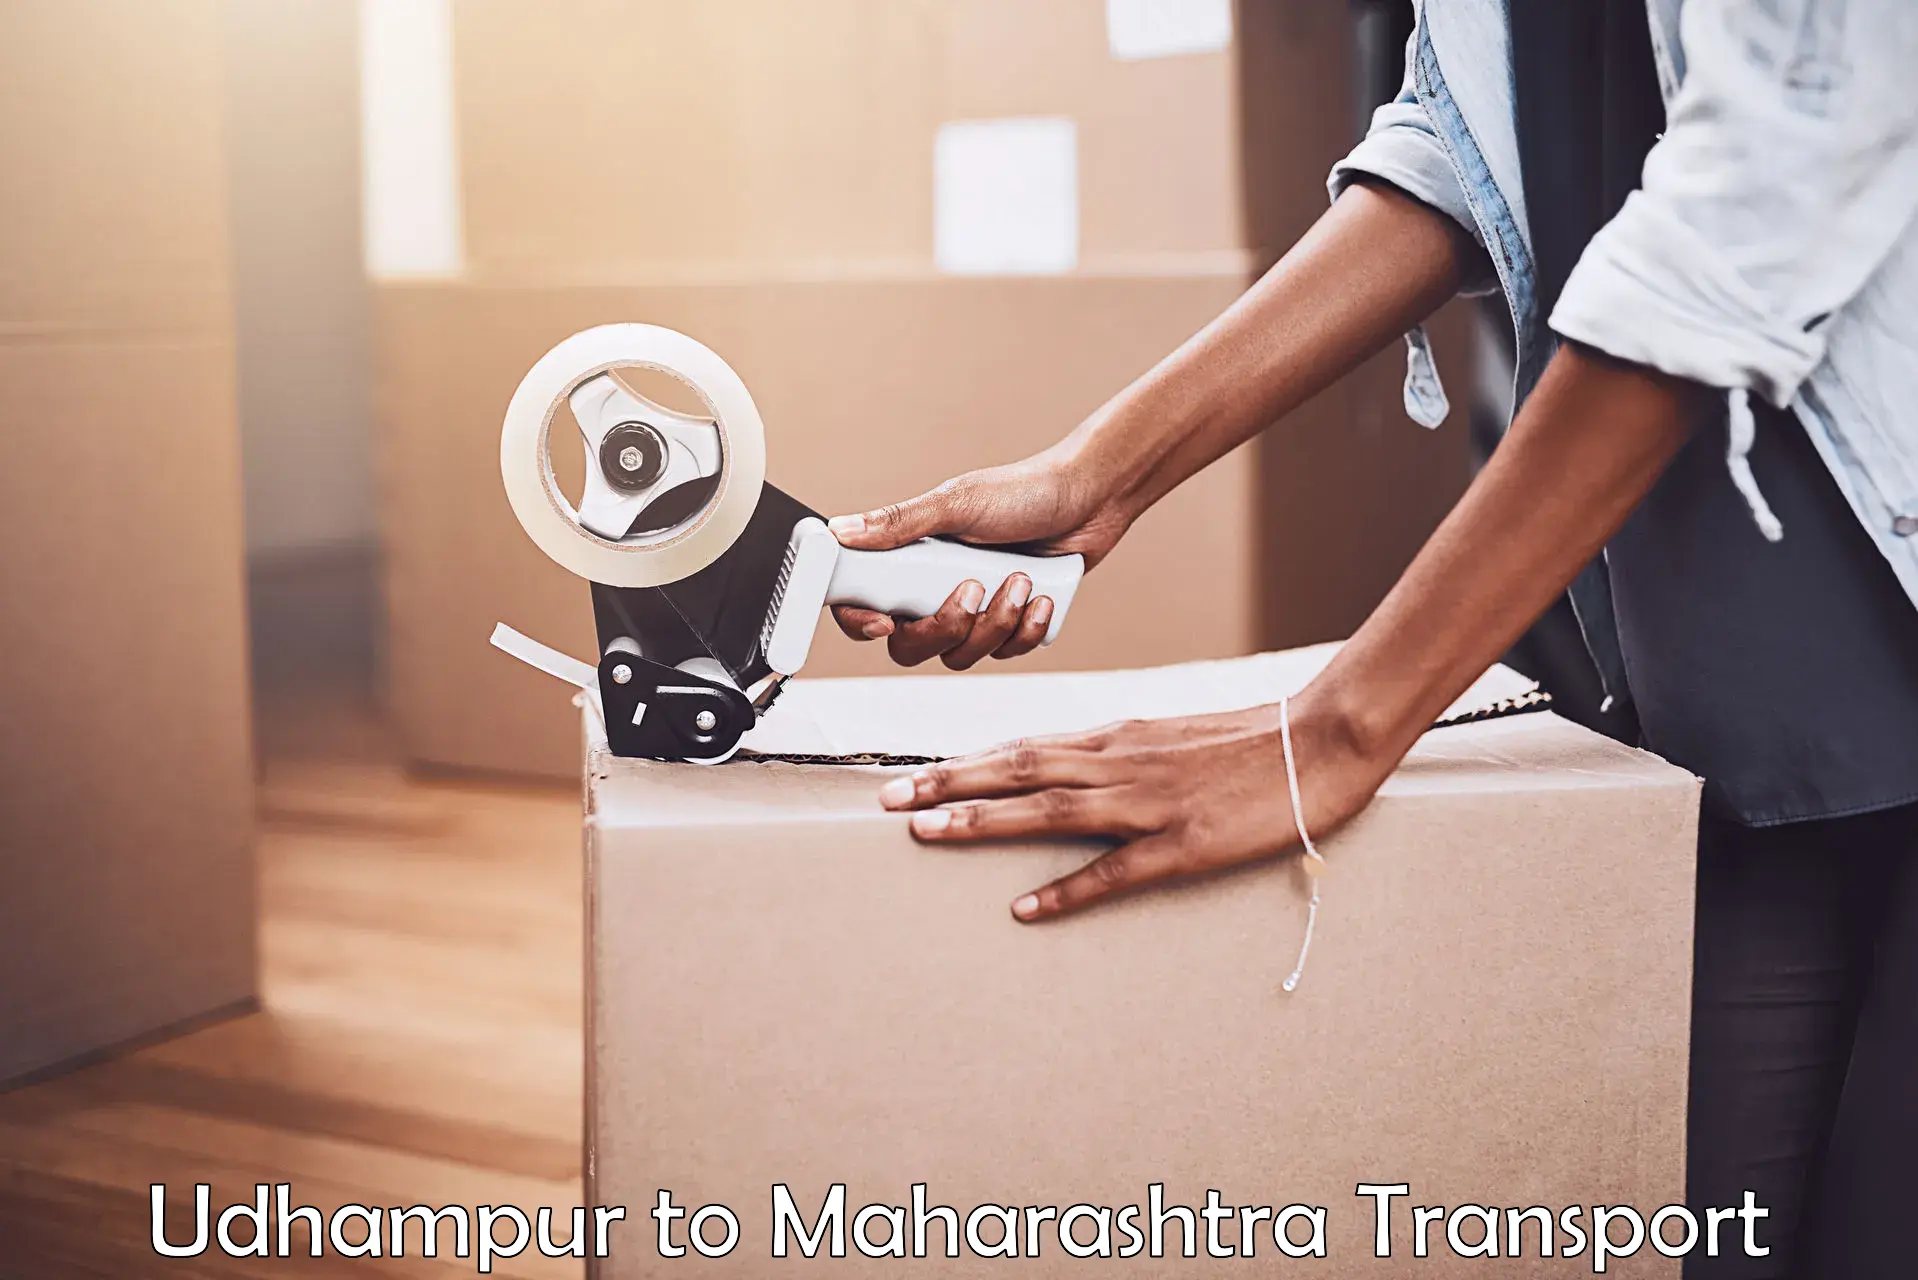 Furniture transport service Udhampur to Chandrapur